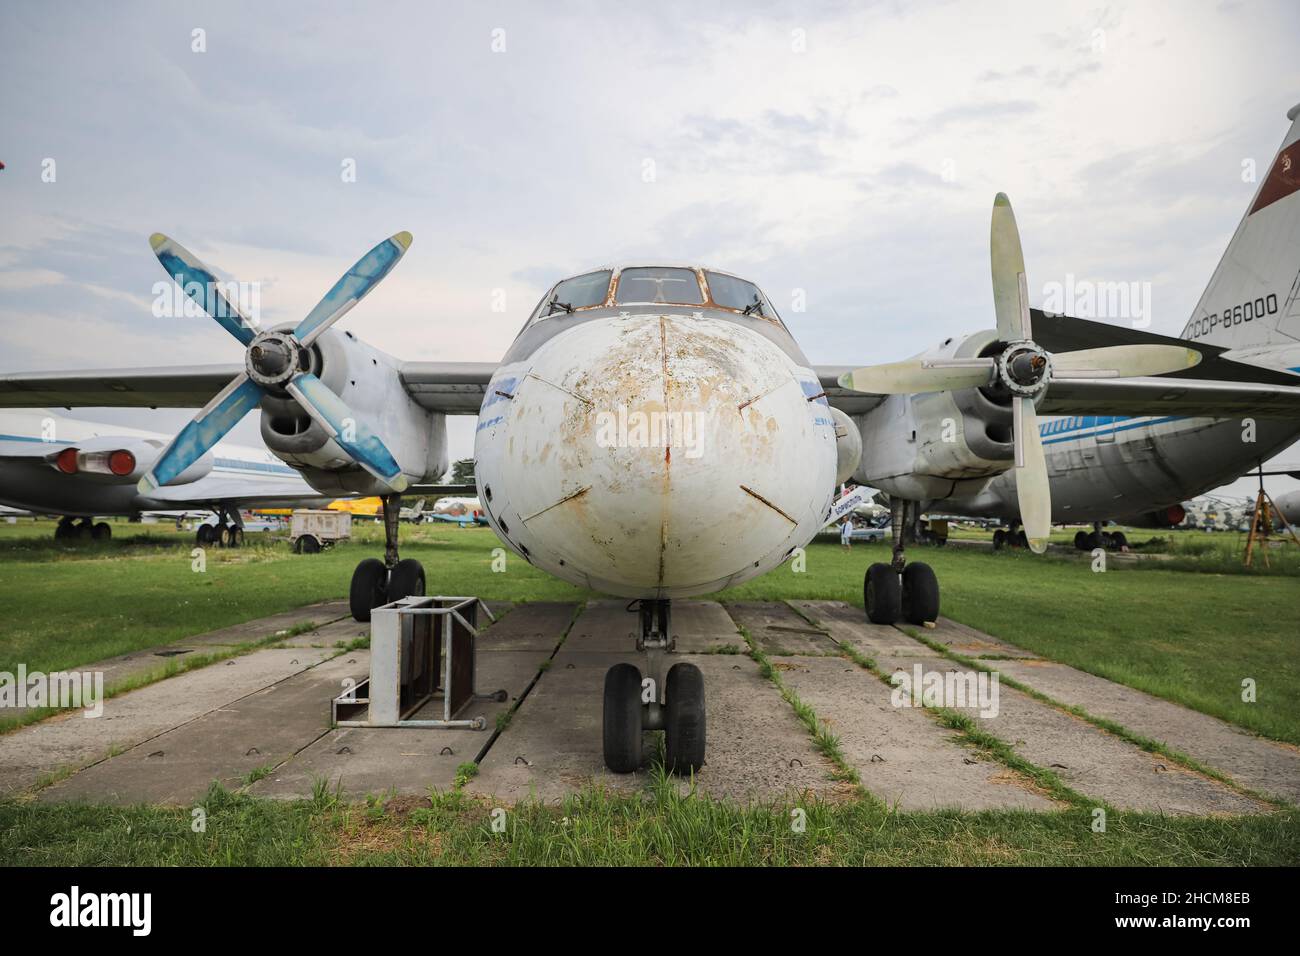 KIEV, UCRAINA - 01 AGOSTO 2021: Uhuru Airlines Antonov AN-26 esposto al Museo dell'Aviazione statale di Oleg Antonov Foto Stock